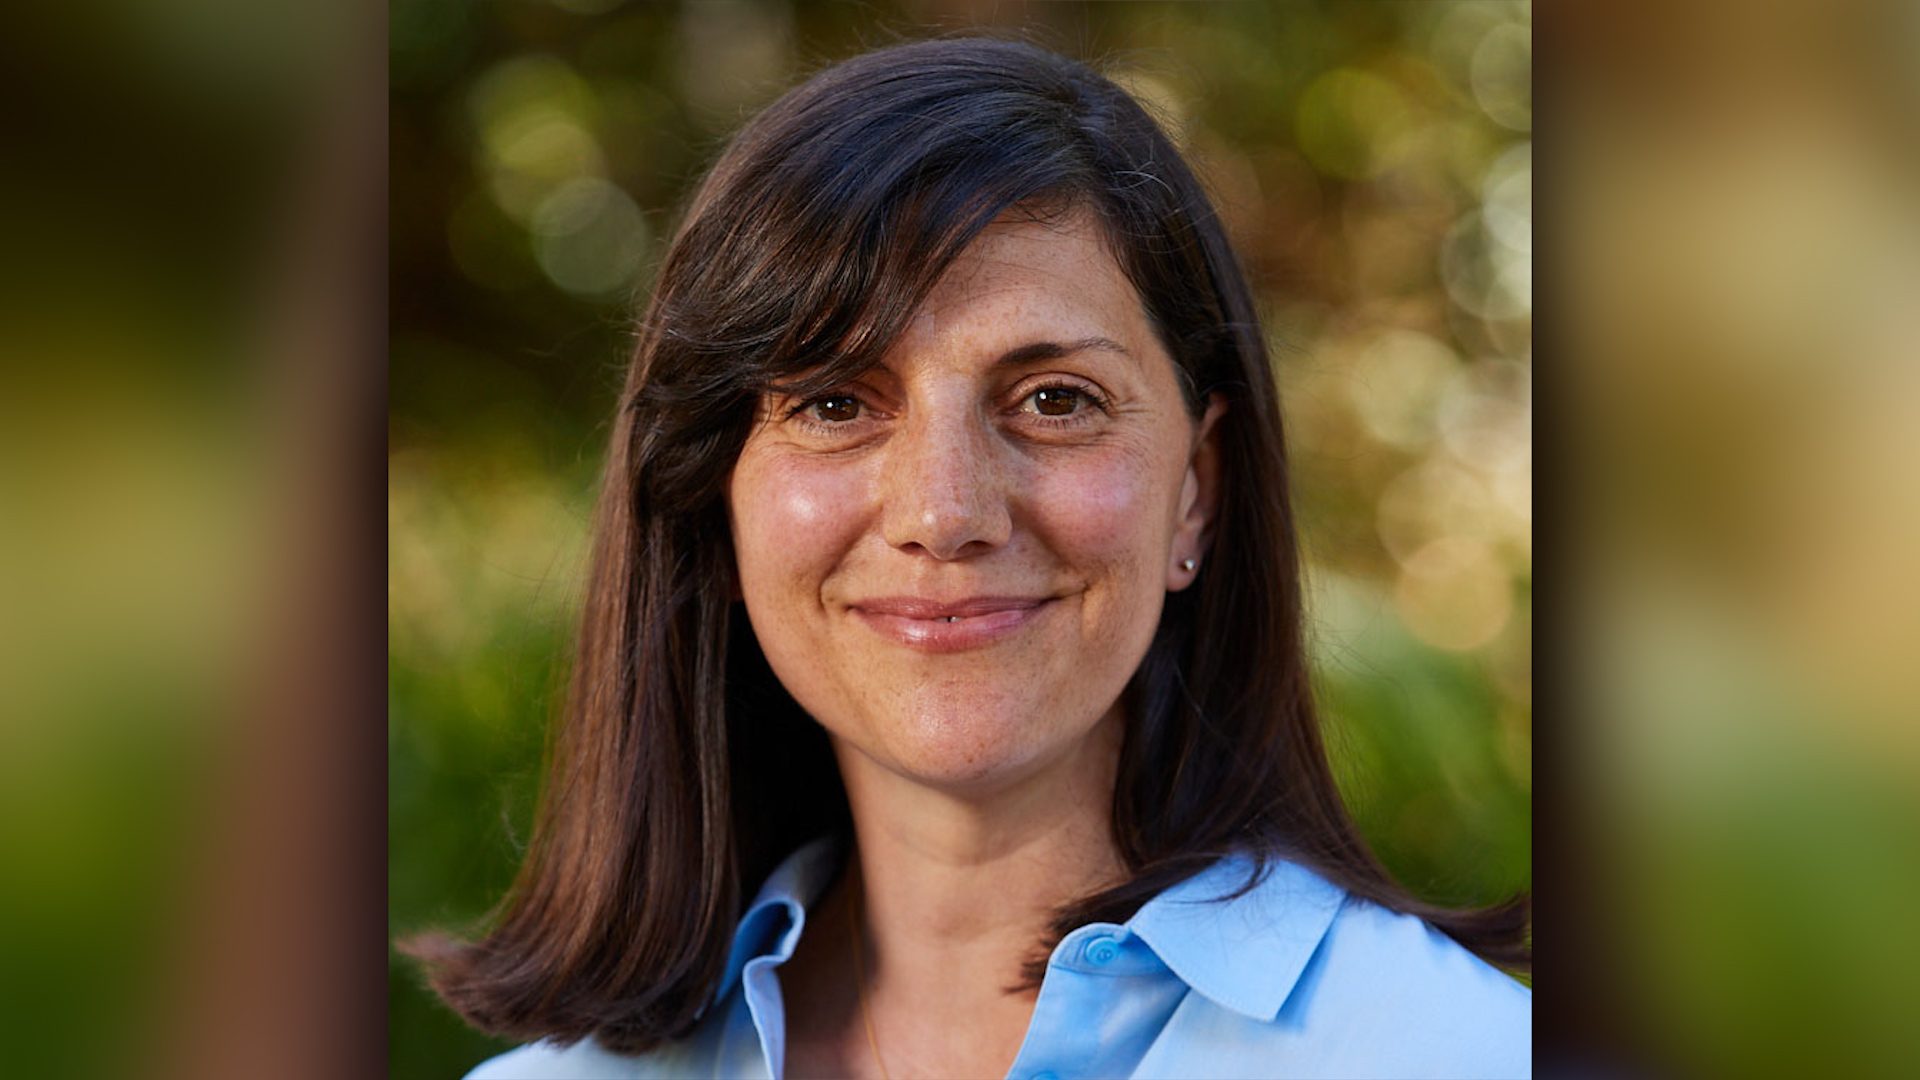 Dr Celeste Rodriguez Louro